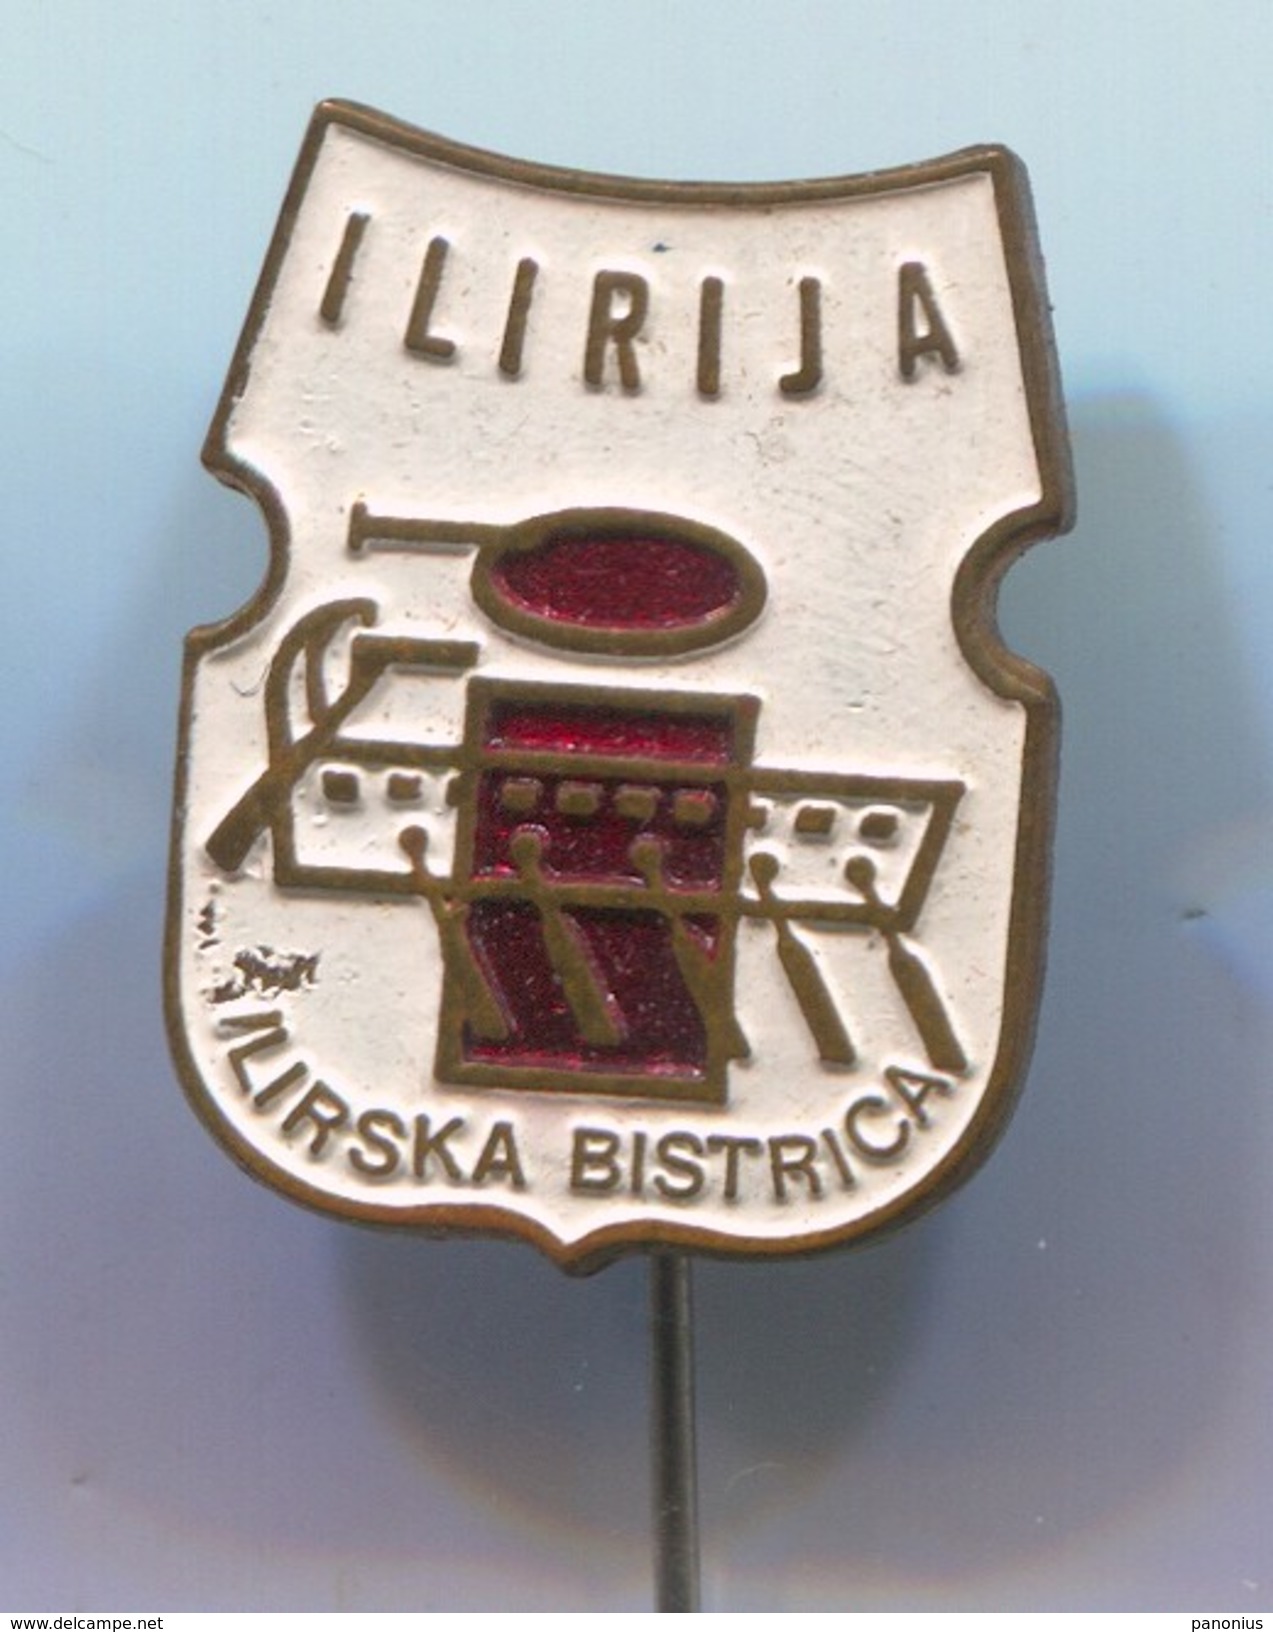 Rowing, Rudern, Canu, Kayak - Club ILIRIJA, Ilirska Bistrica Slovenia, Vintage Pin, Badge, Abzeichen - Roeisport